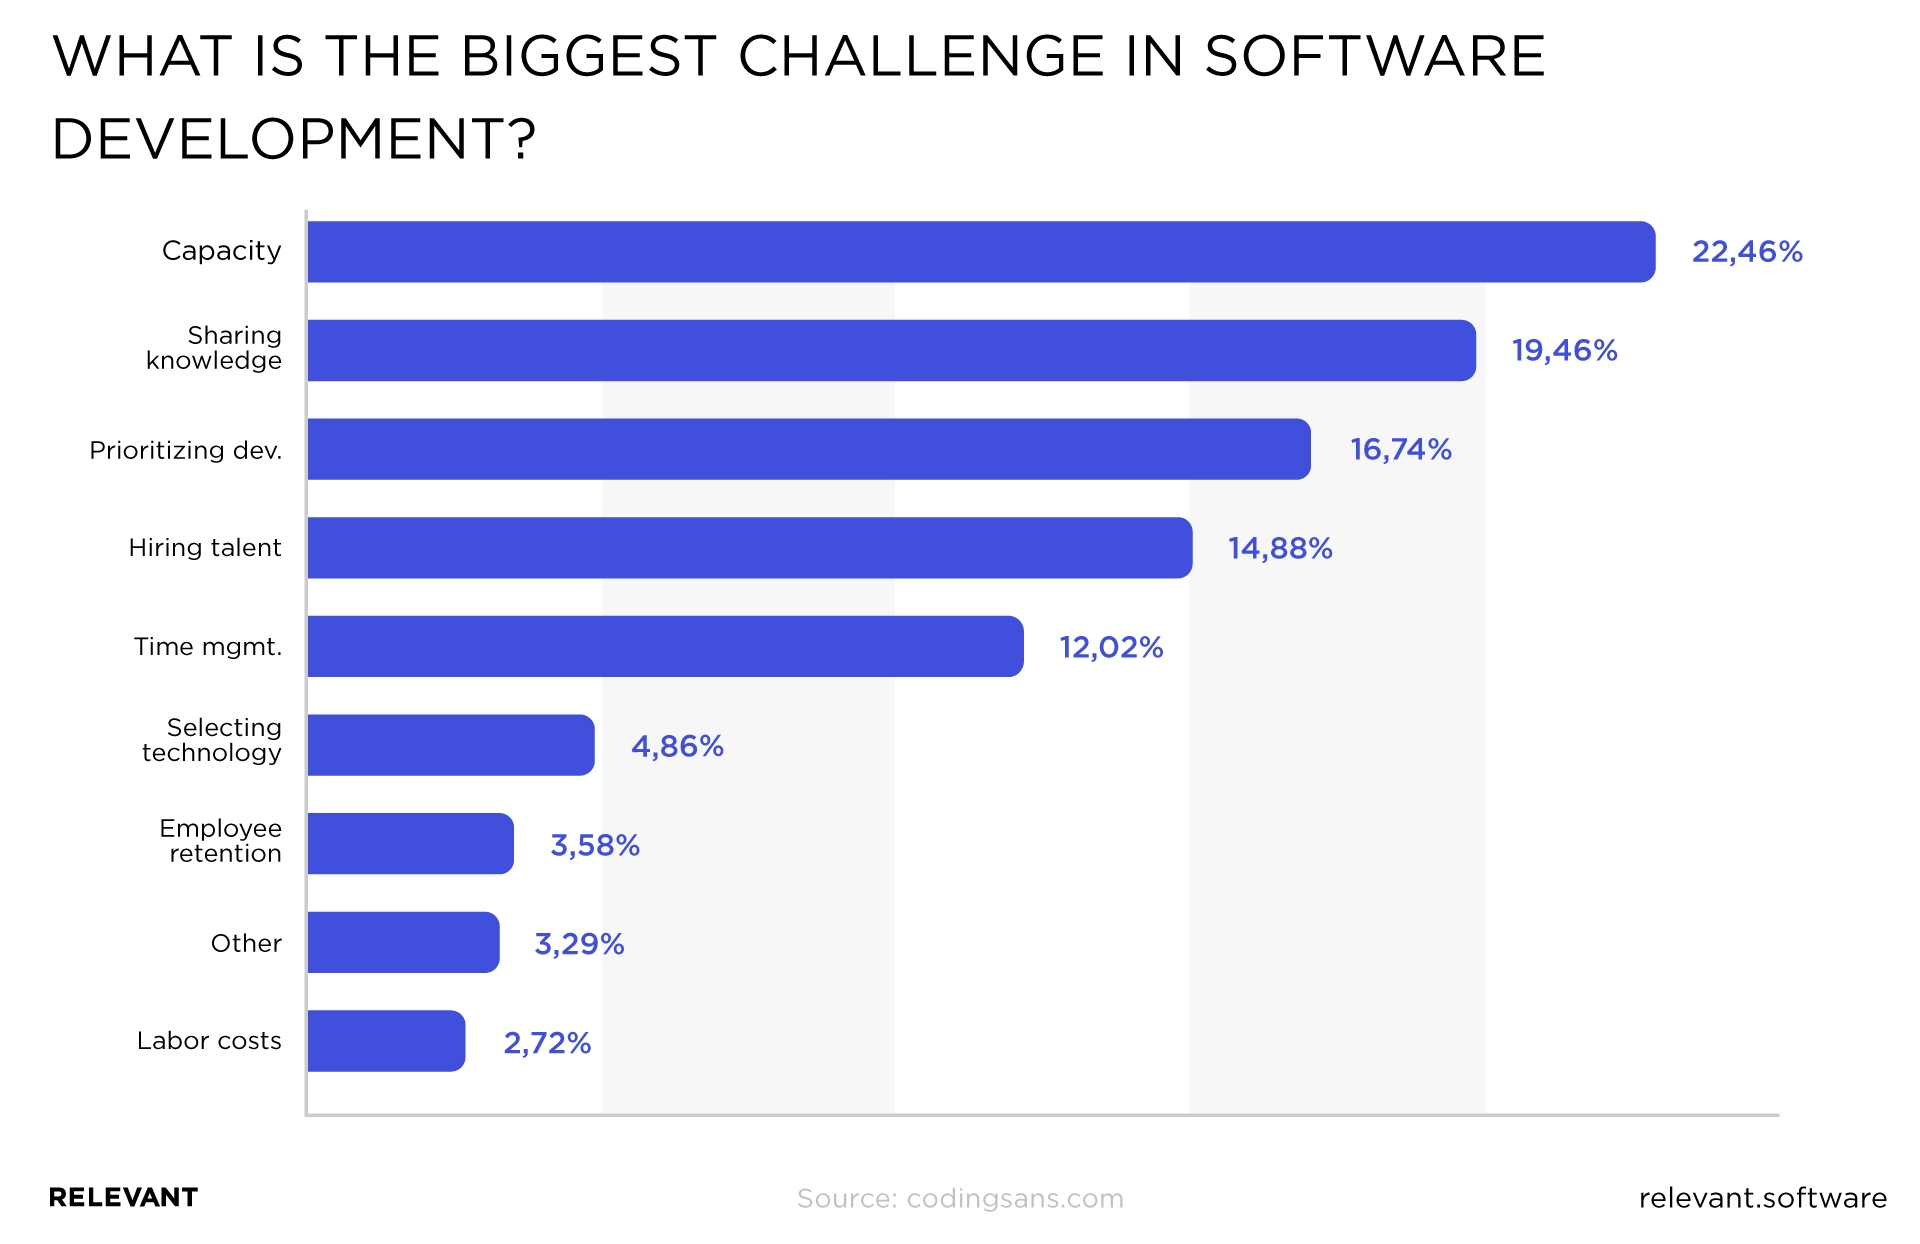 The biggest challenge in software development